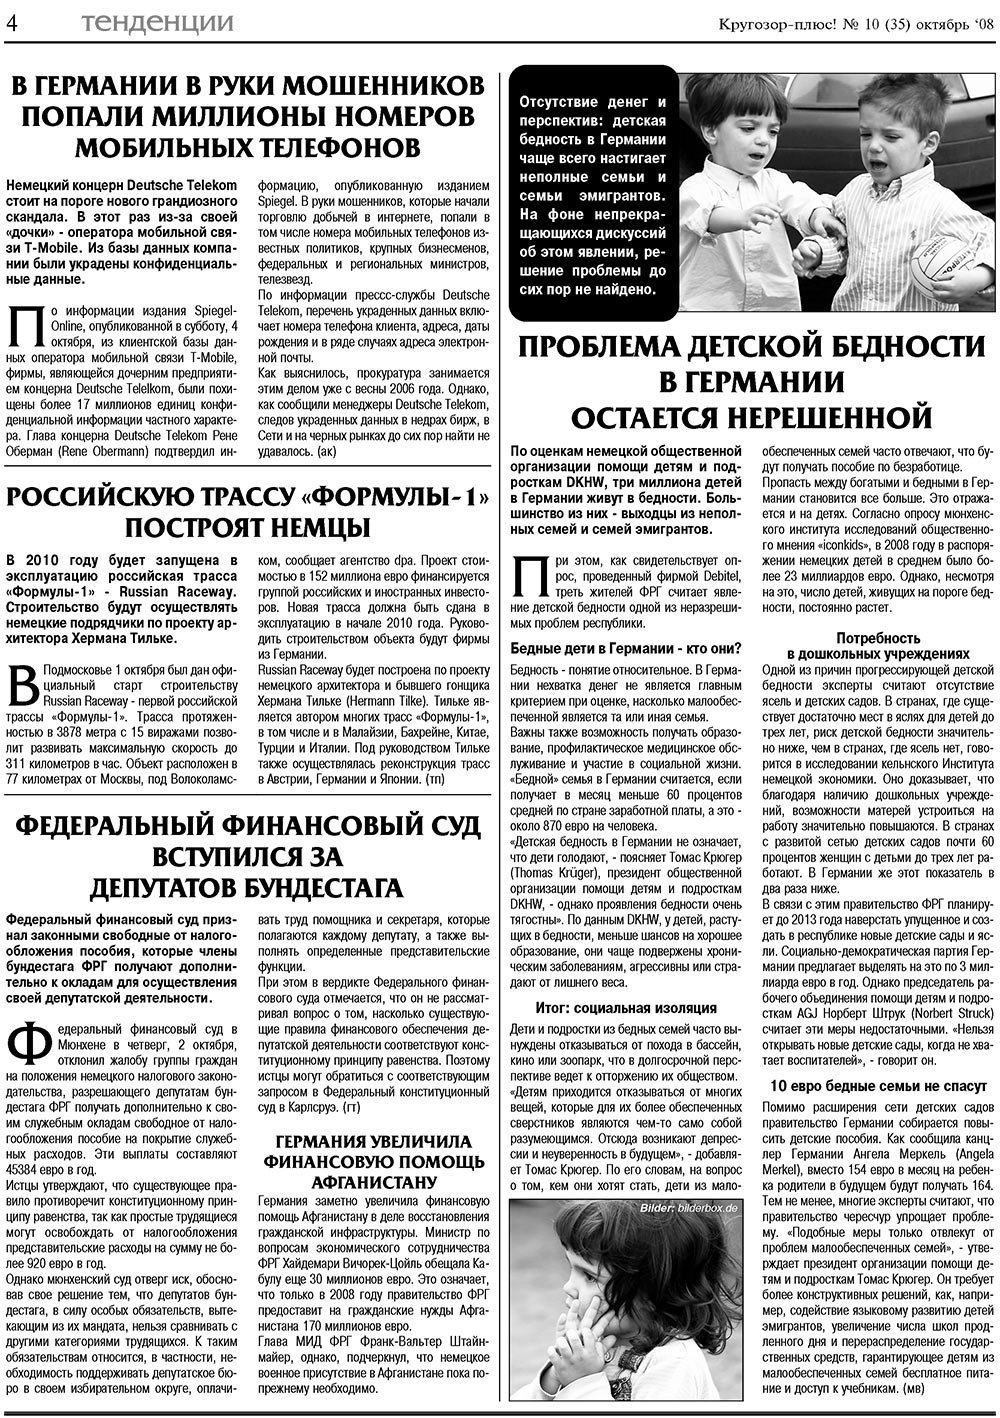 Кругозор плюс! (газета). 2008 год, номер 10, стр. 4